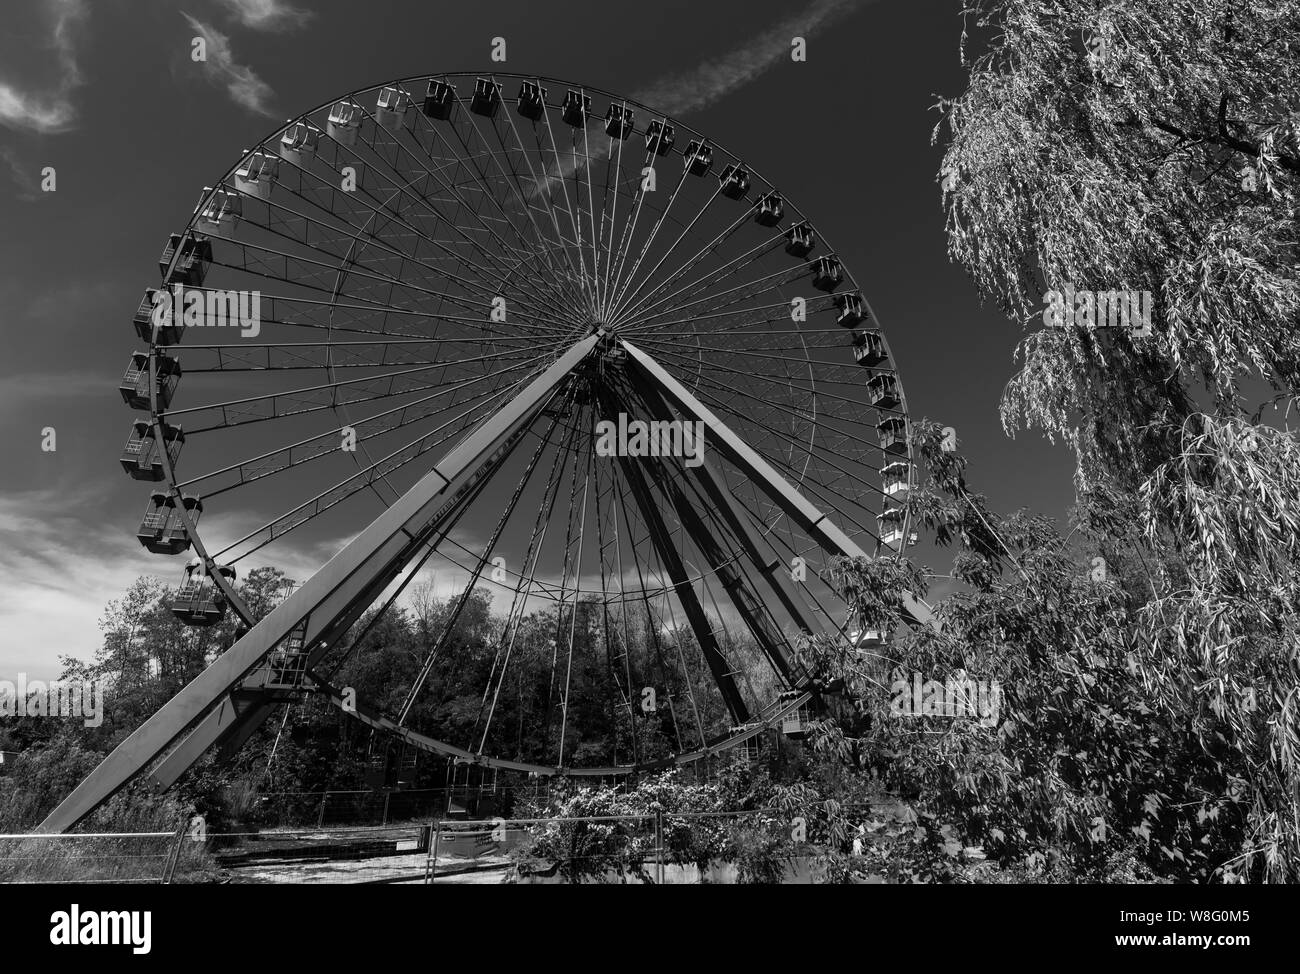 Abandoned ferris wheel in Spreepark, disused Berlin theme park from the GDR era Stock Photo